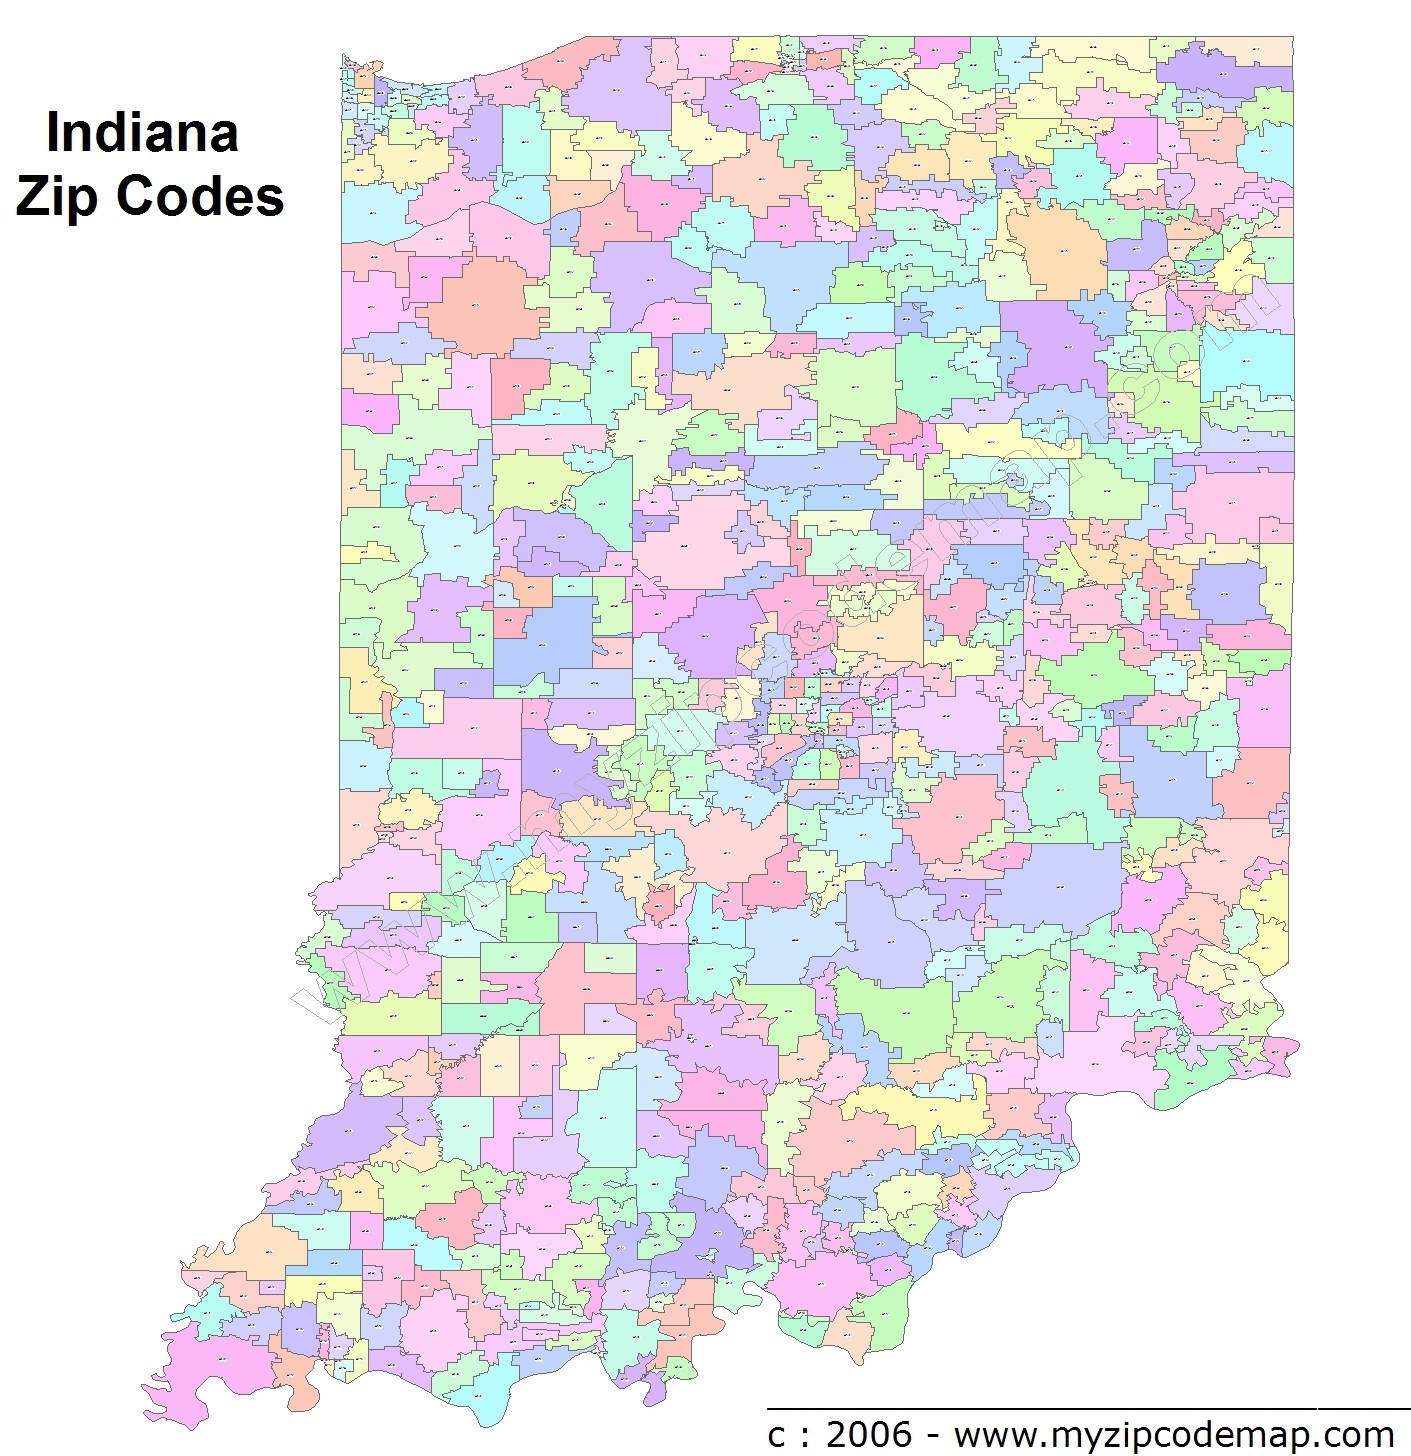 Indiana Zip Code Maps Free Indiana Zip Code Maps